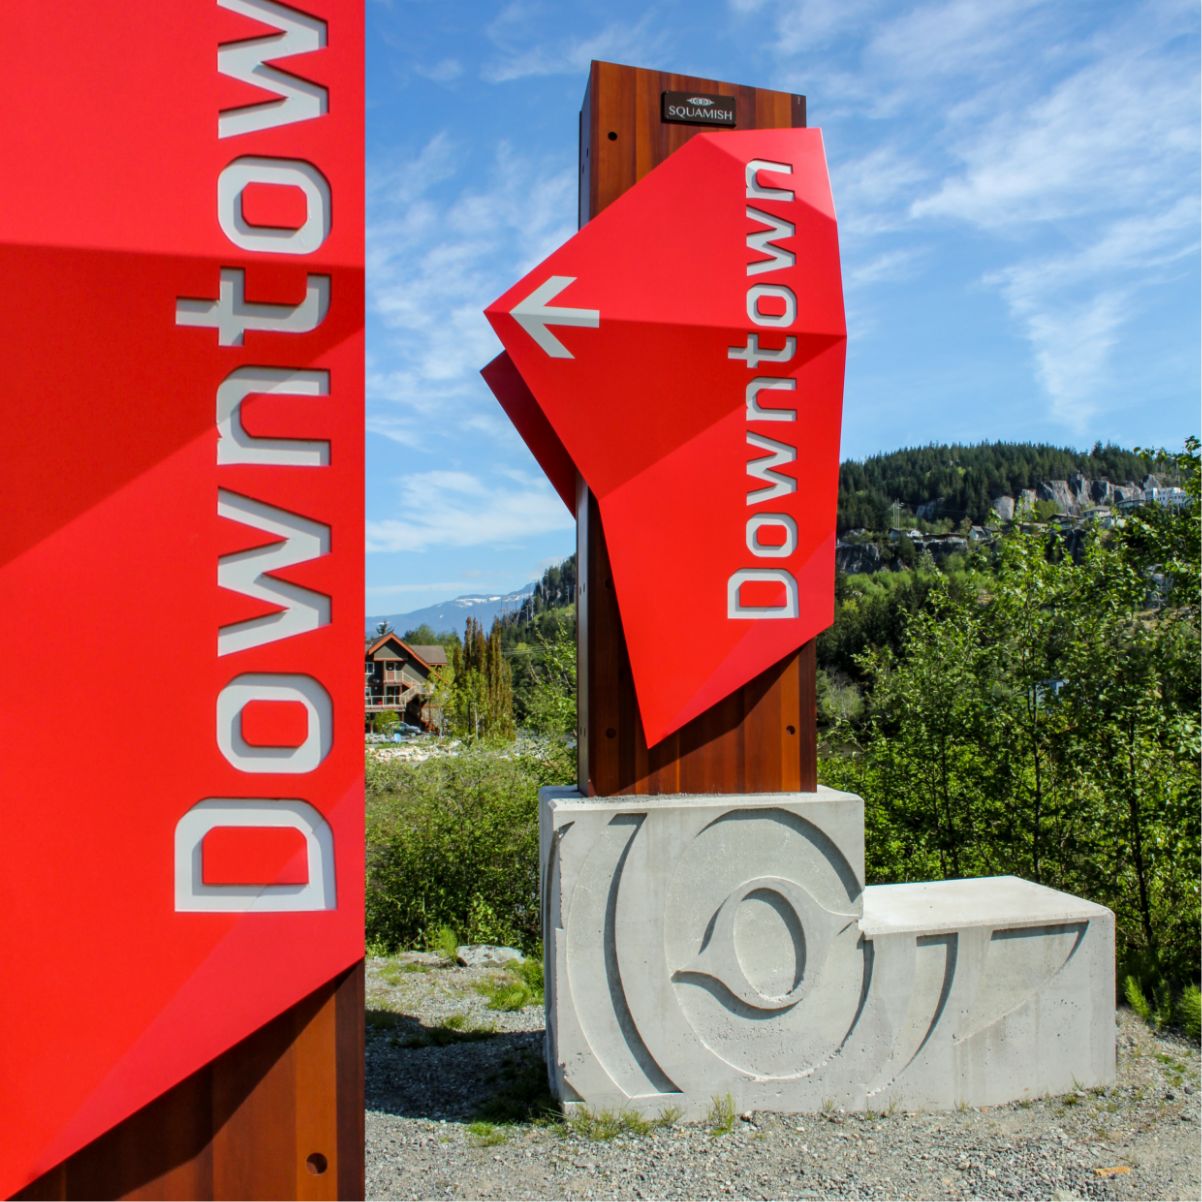 Squamish Way Finding Facility Signage: Downtown signage